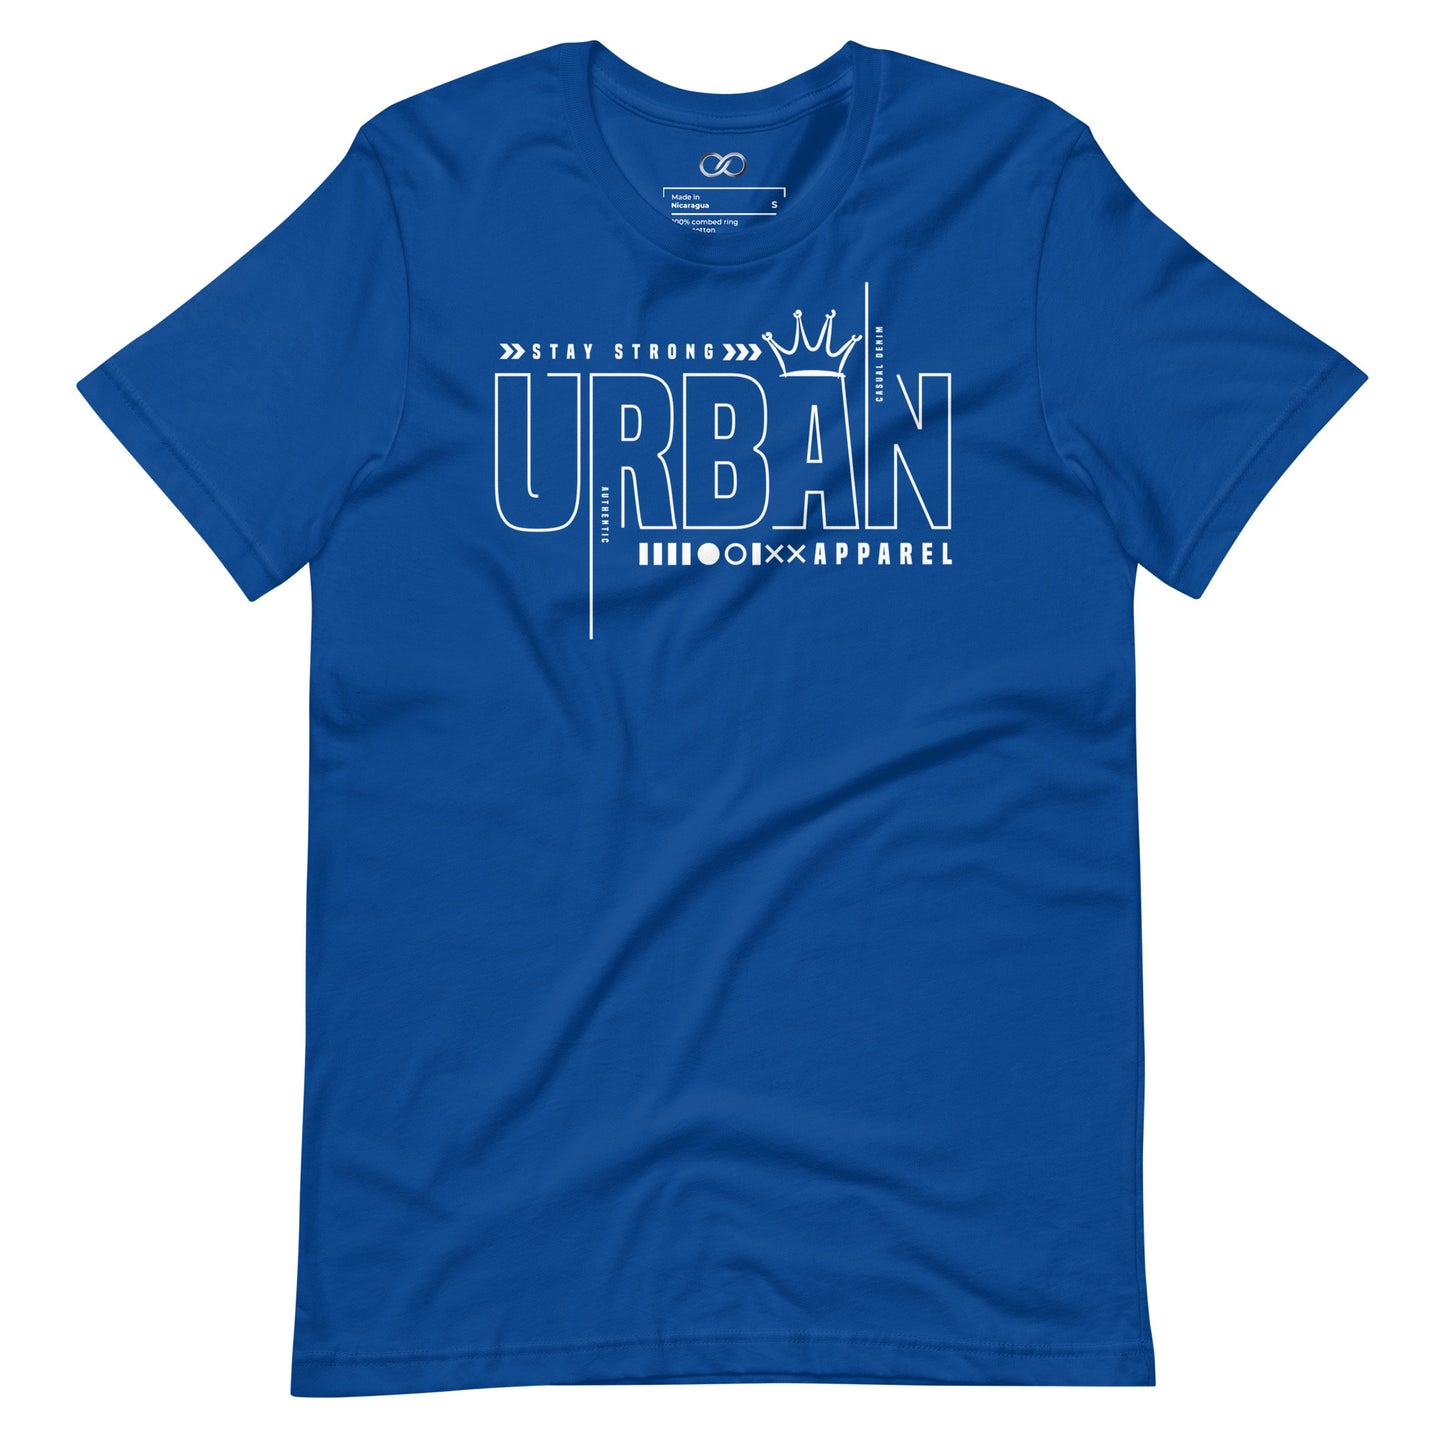 Urban Streetwear T-Shirt - City Fashion Statement Tee